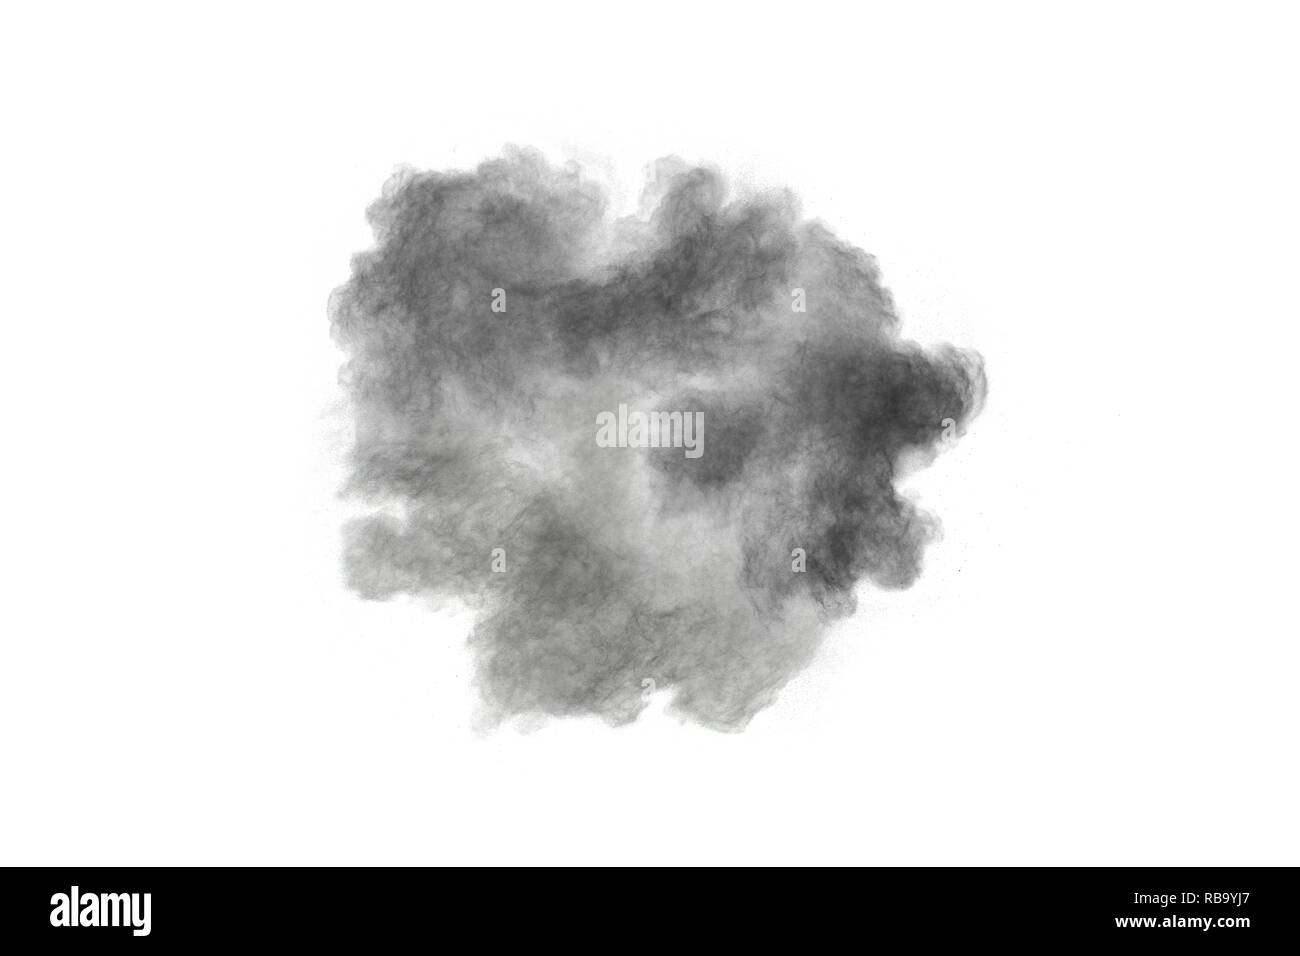 Black powder explosion against white background. Black dust particles splashing. Stock Photo